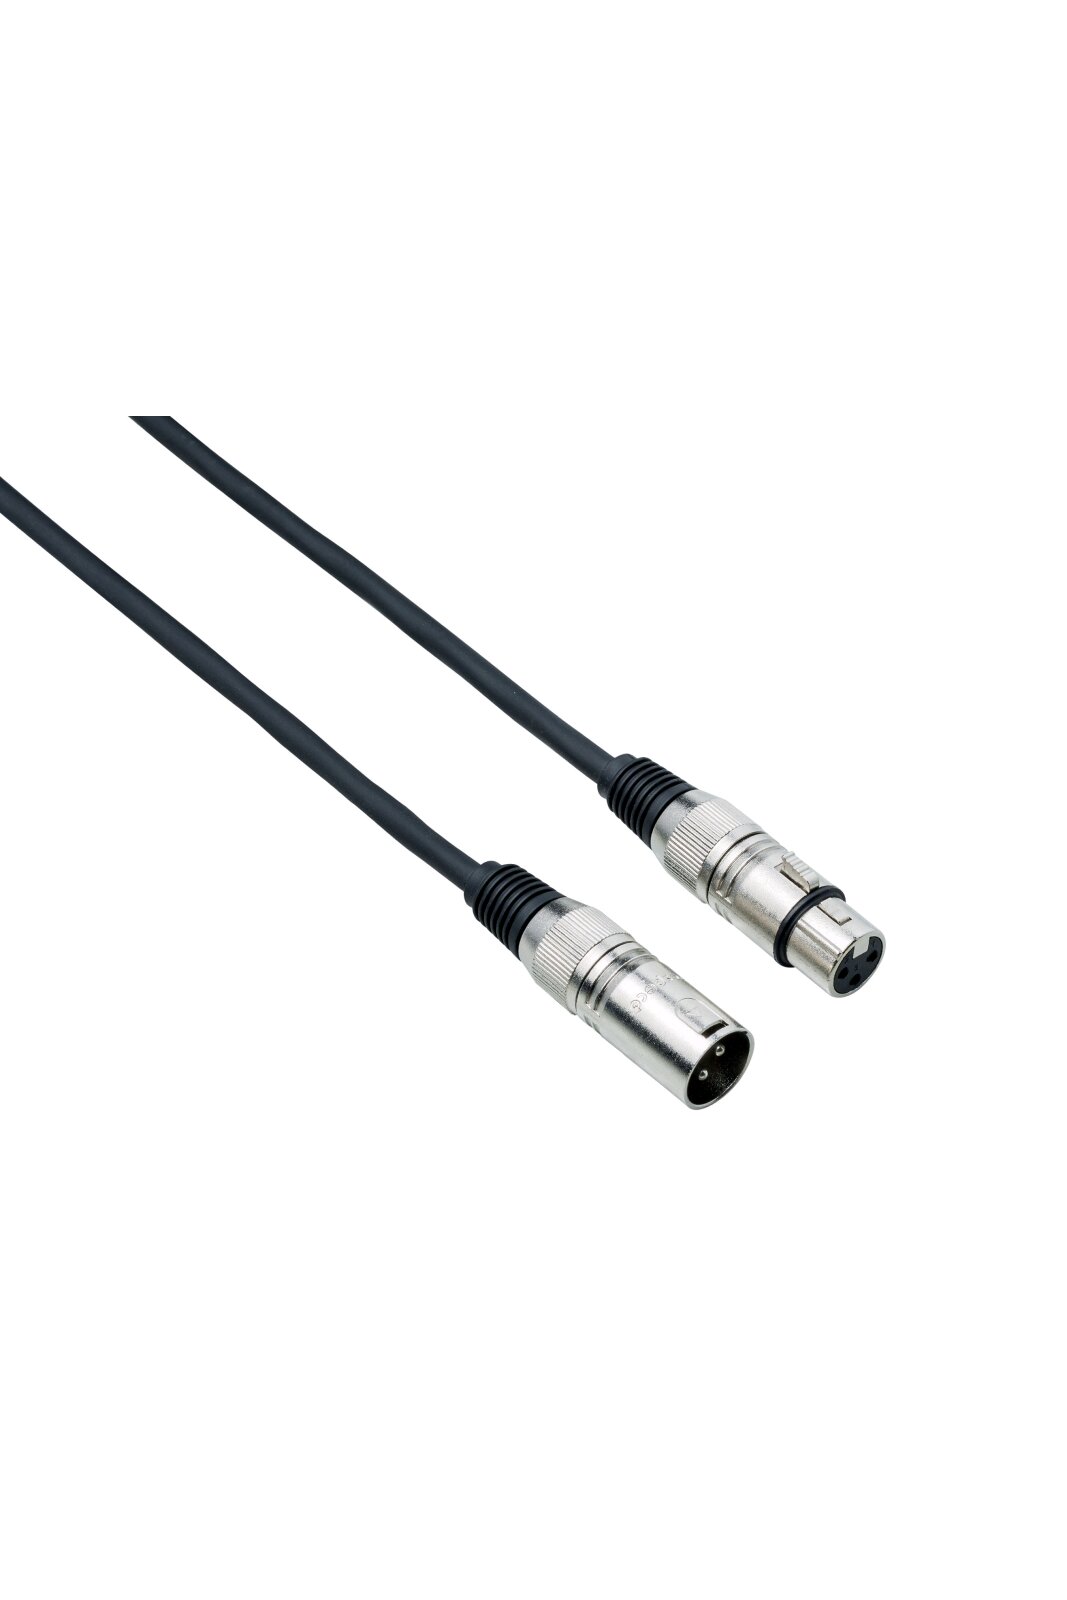 Bespeco DMX010 DMX-Kabel 10 m : photo 1